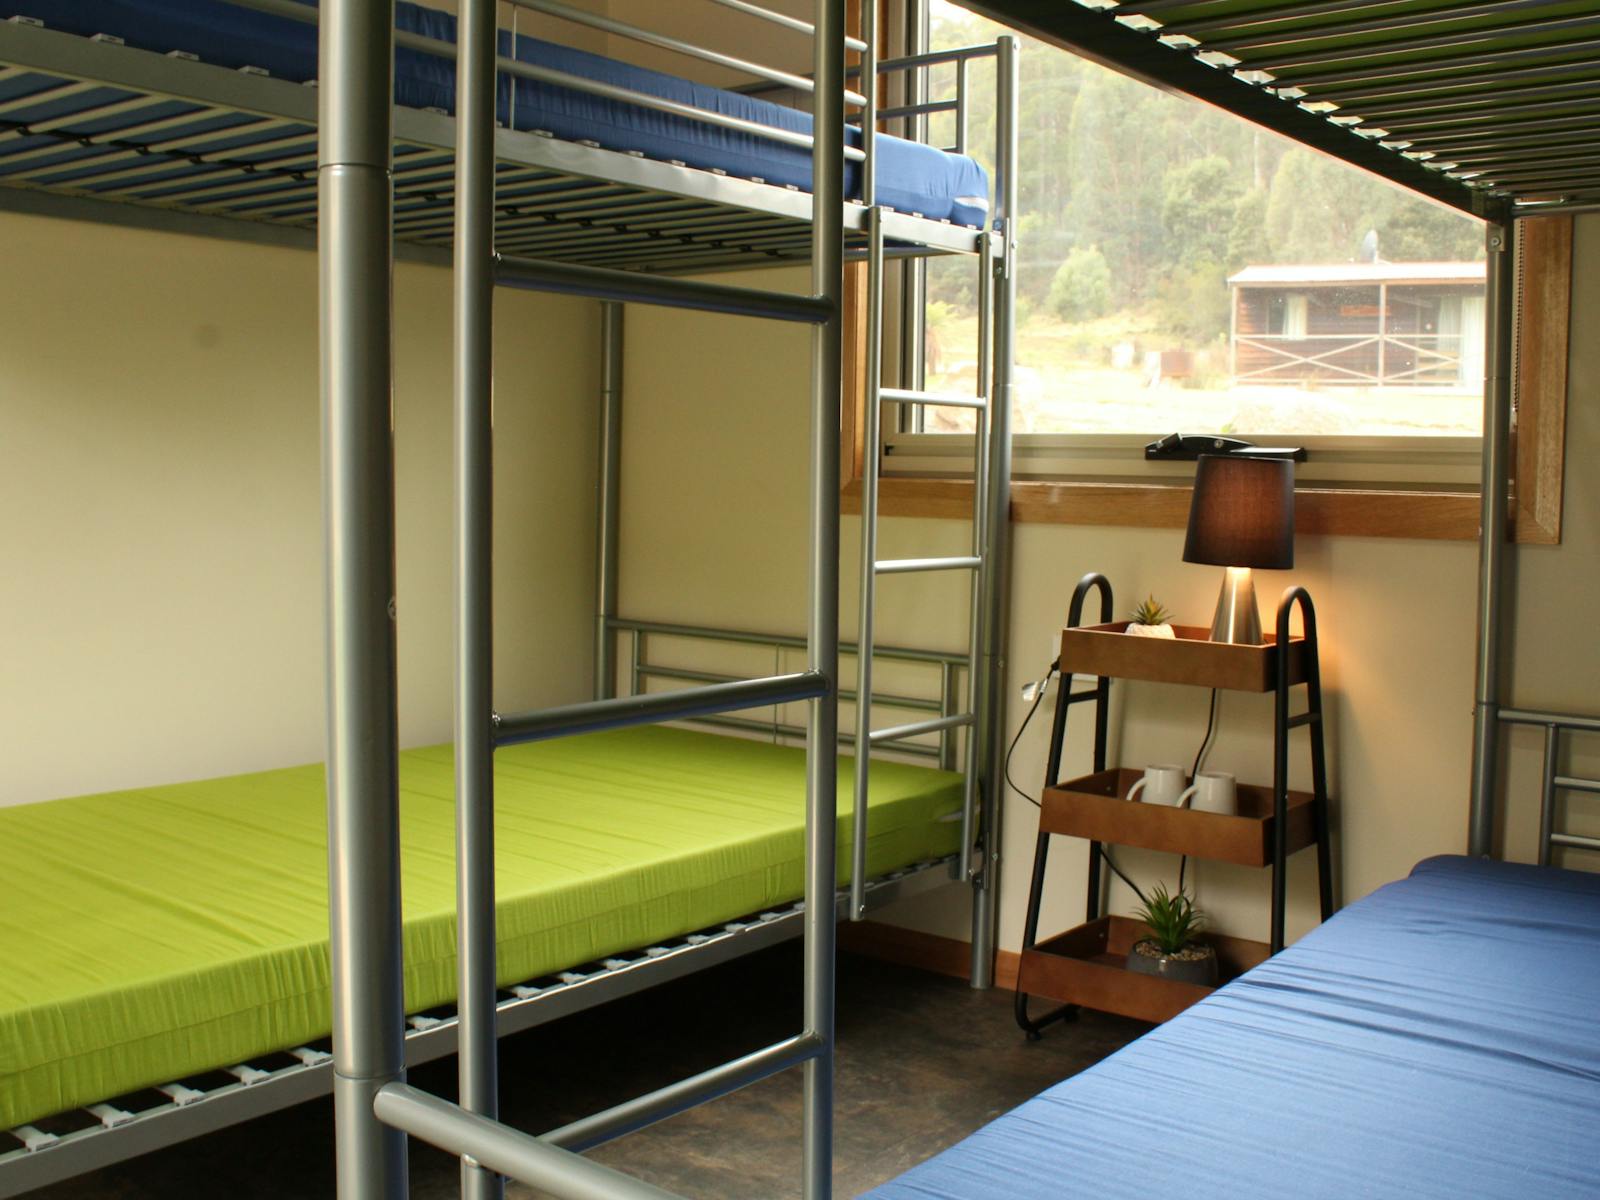 Bunk room (sleeps 2 or 4) - utilises shared kitchen/bathroom amenities